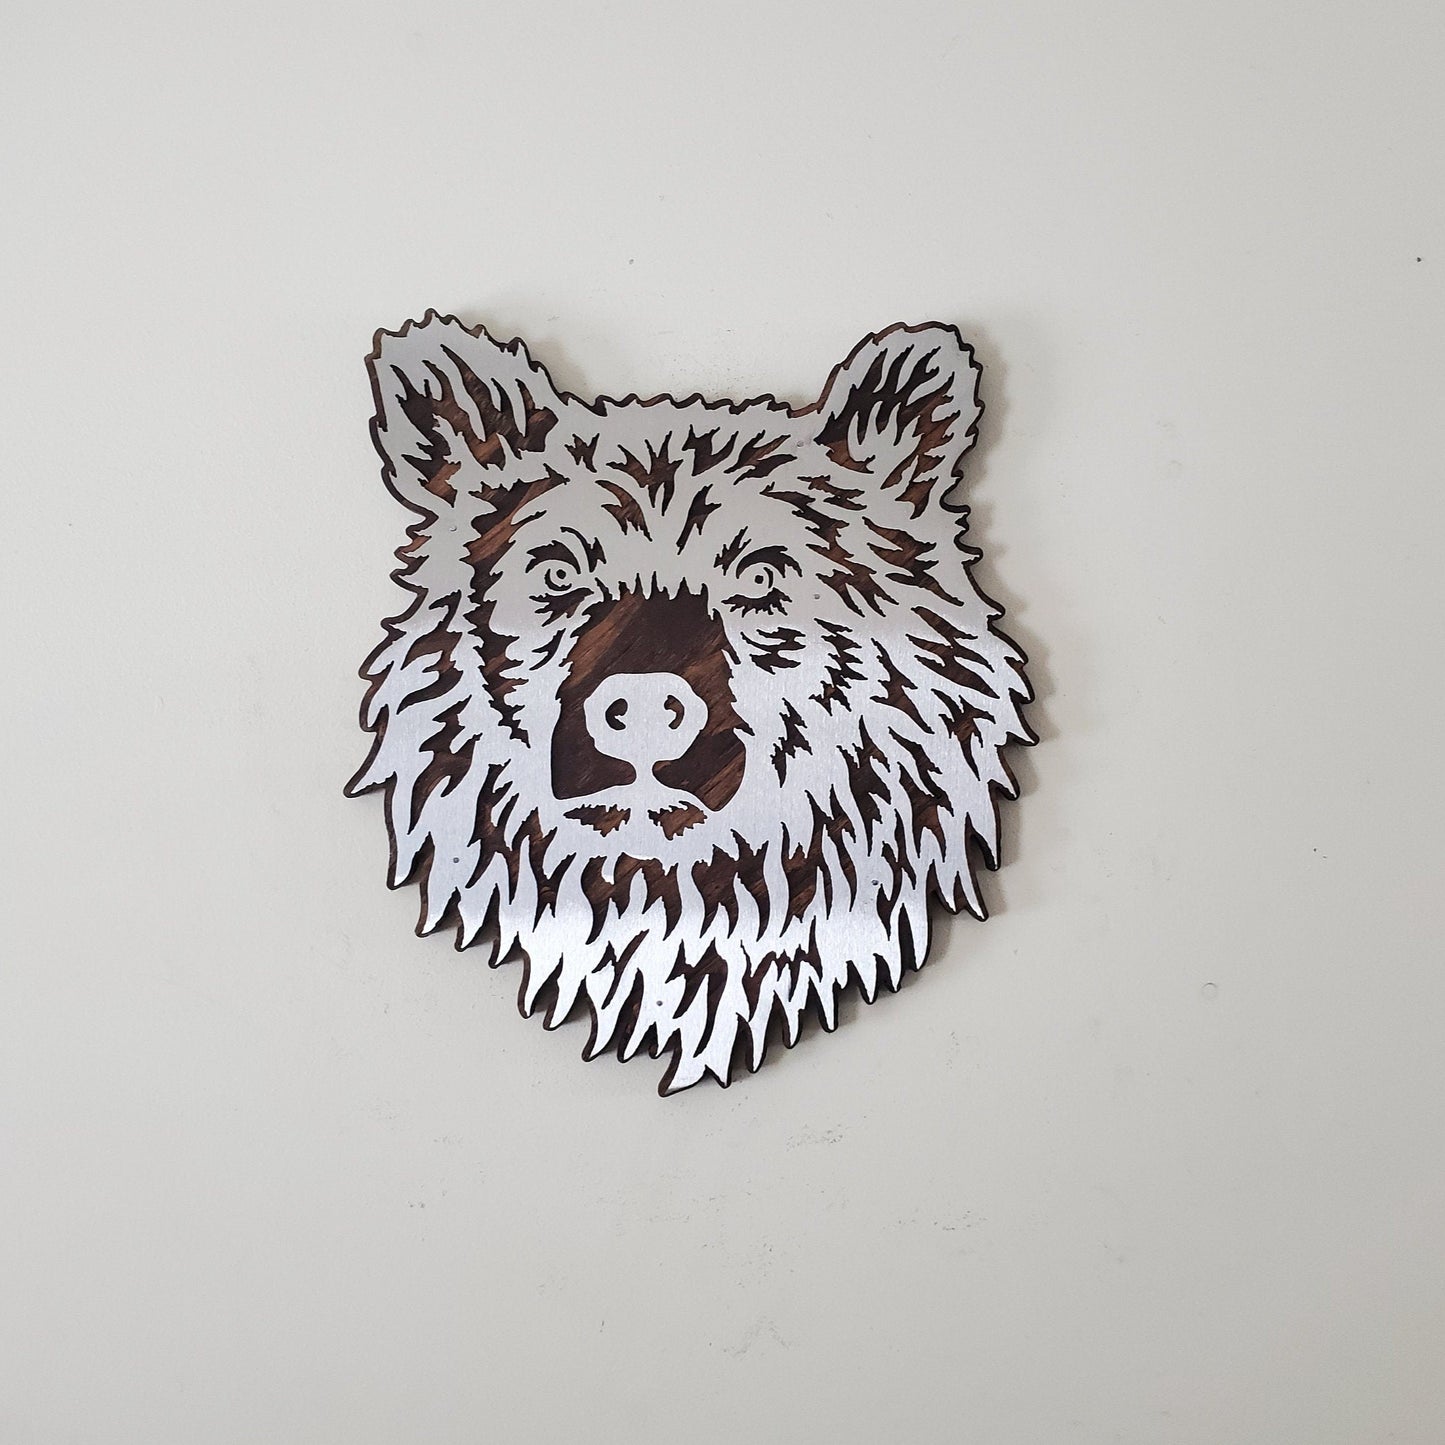 Bear head metal art on wood wall decor Made in USA